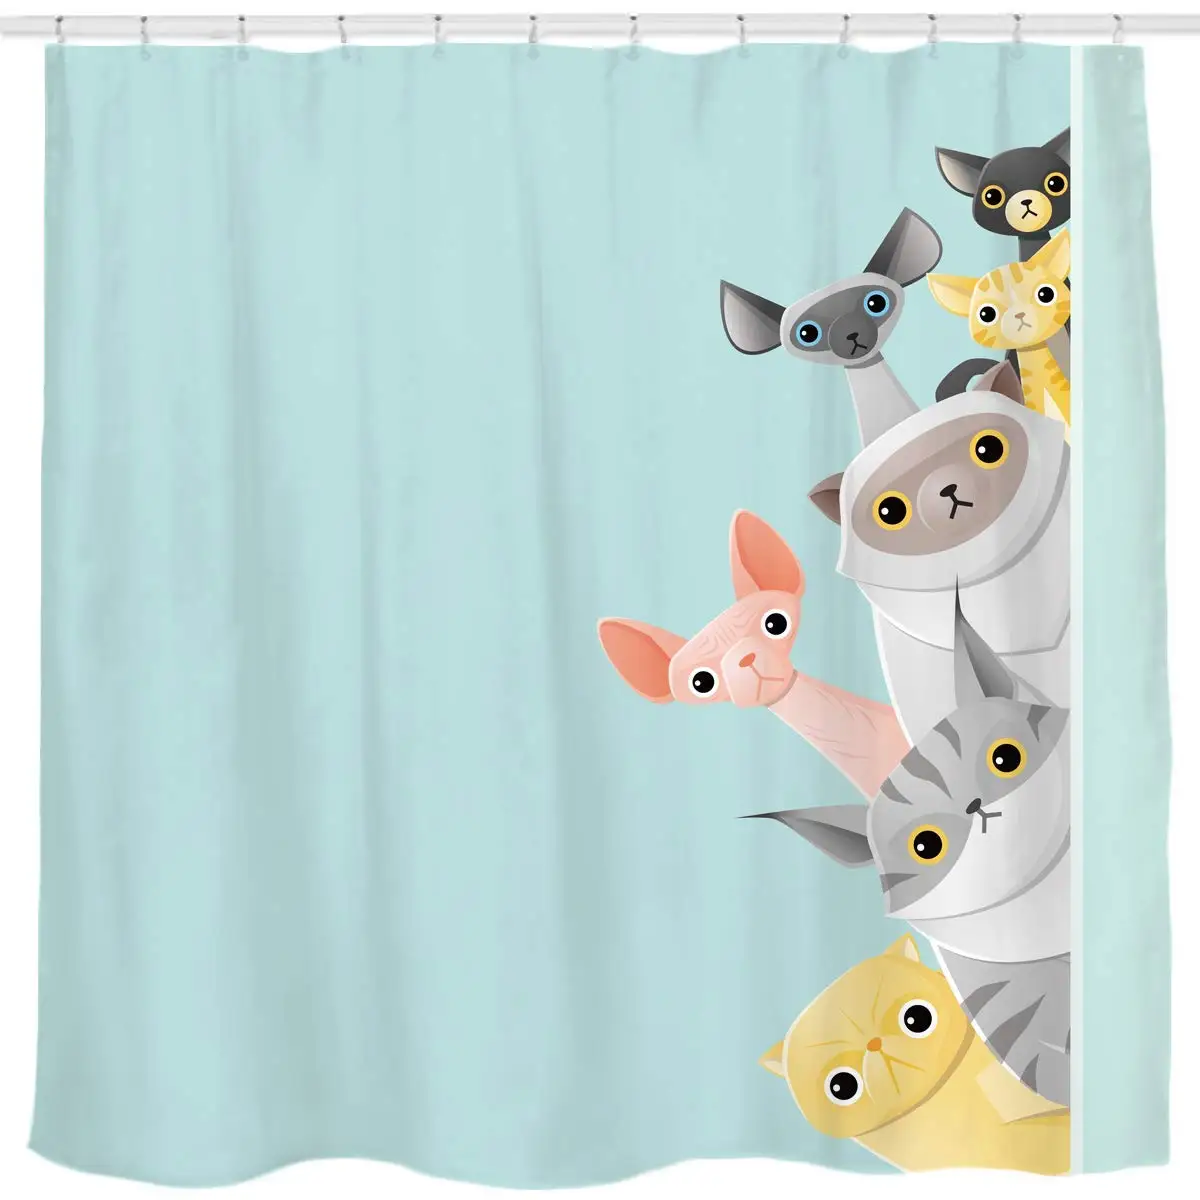 

Sunlit Cute Striped Shorthair Peekaboo Cats Cartoon Shower Curtain for Kids Cat Lover Funny Kitten Fabric Bathroom Curtain